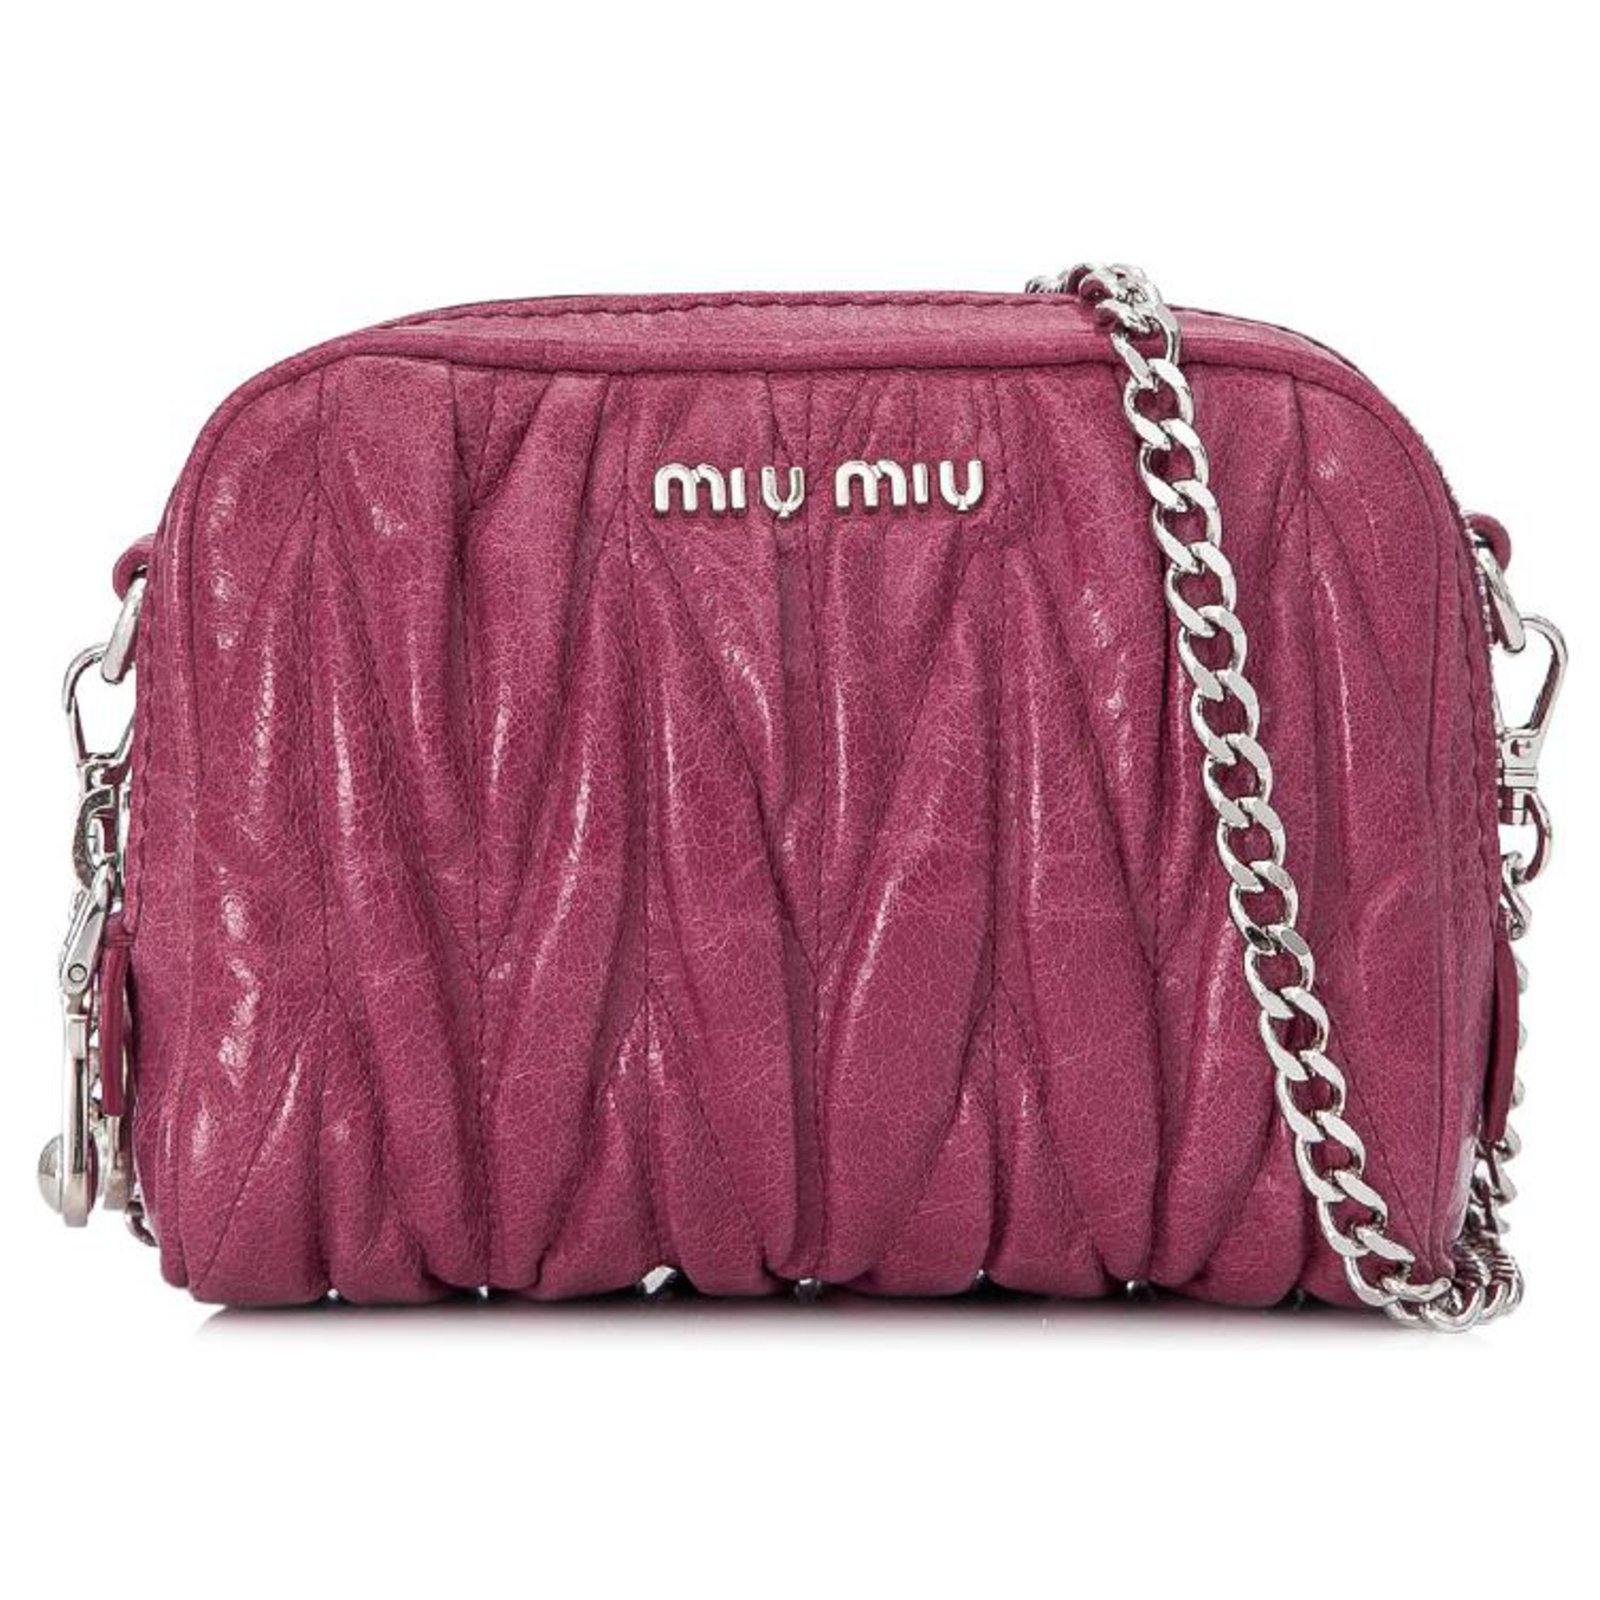 Miu Miu Pink Quilted Leather Crossbody Bag